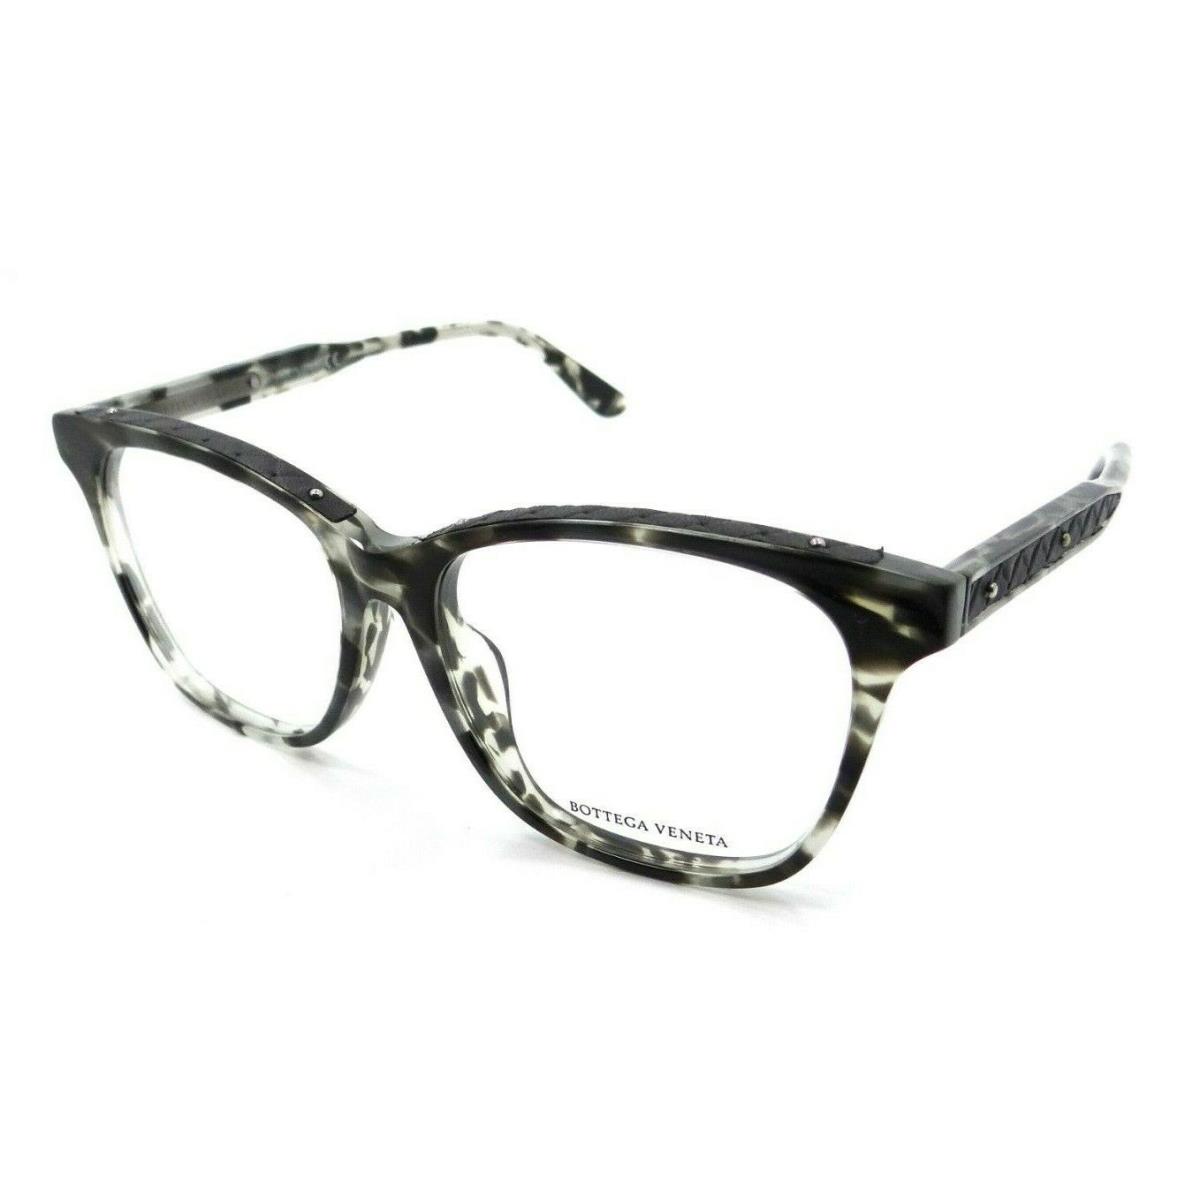 Bottega Veneta Eyeglasses Frames BV0070OA 004 55-15-145 Grey Havana Asian Fit